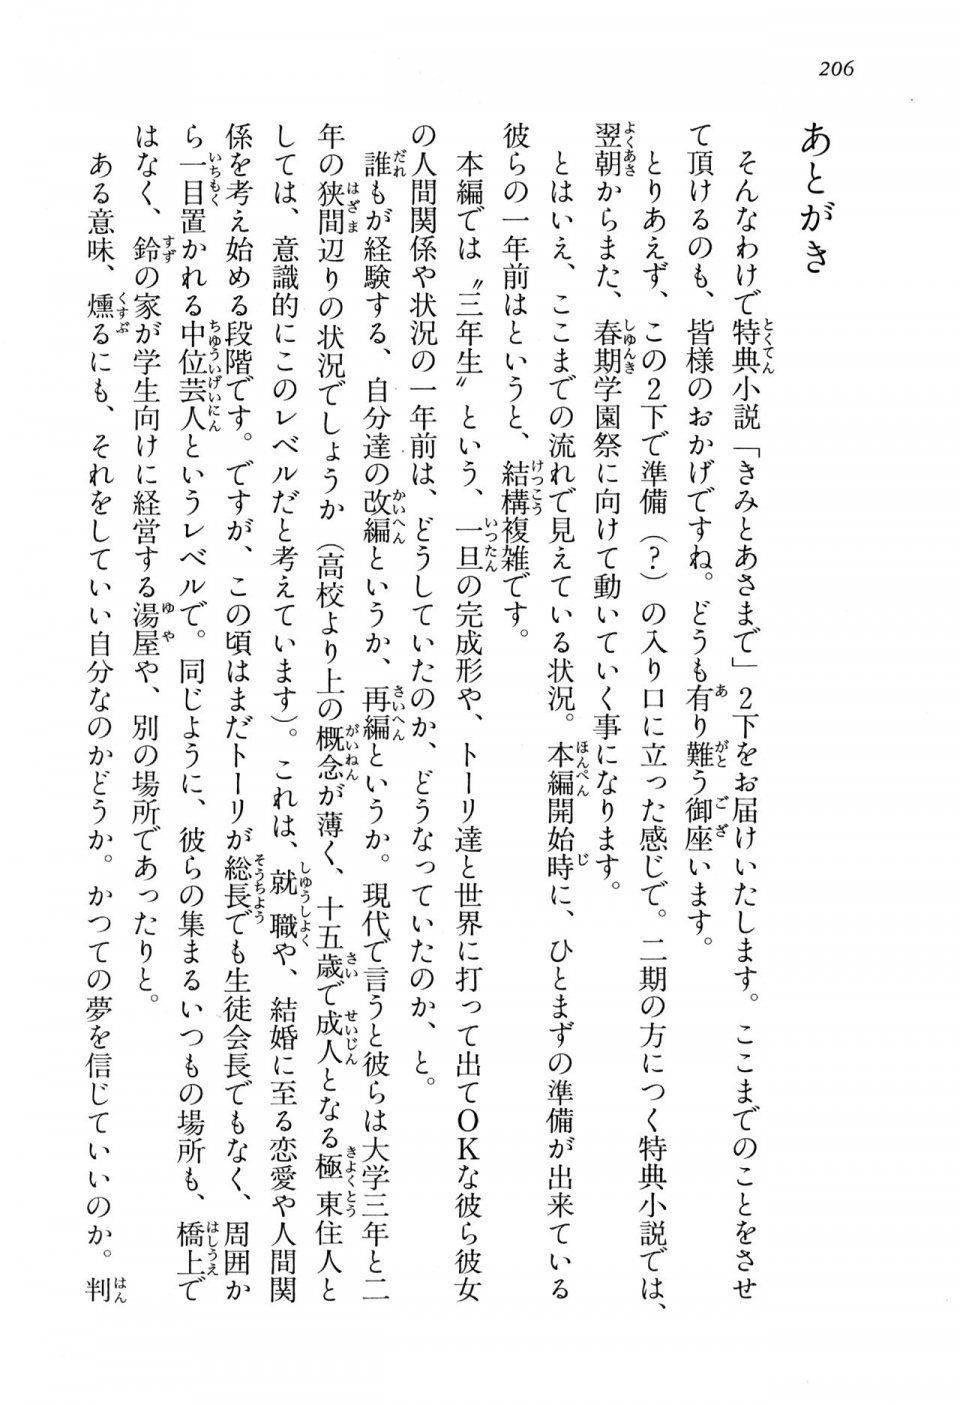 Kyoukai Senjou no Horizon BD Special Mininovel Vol 4(2B) - Photo #210